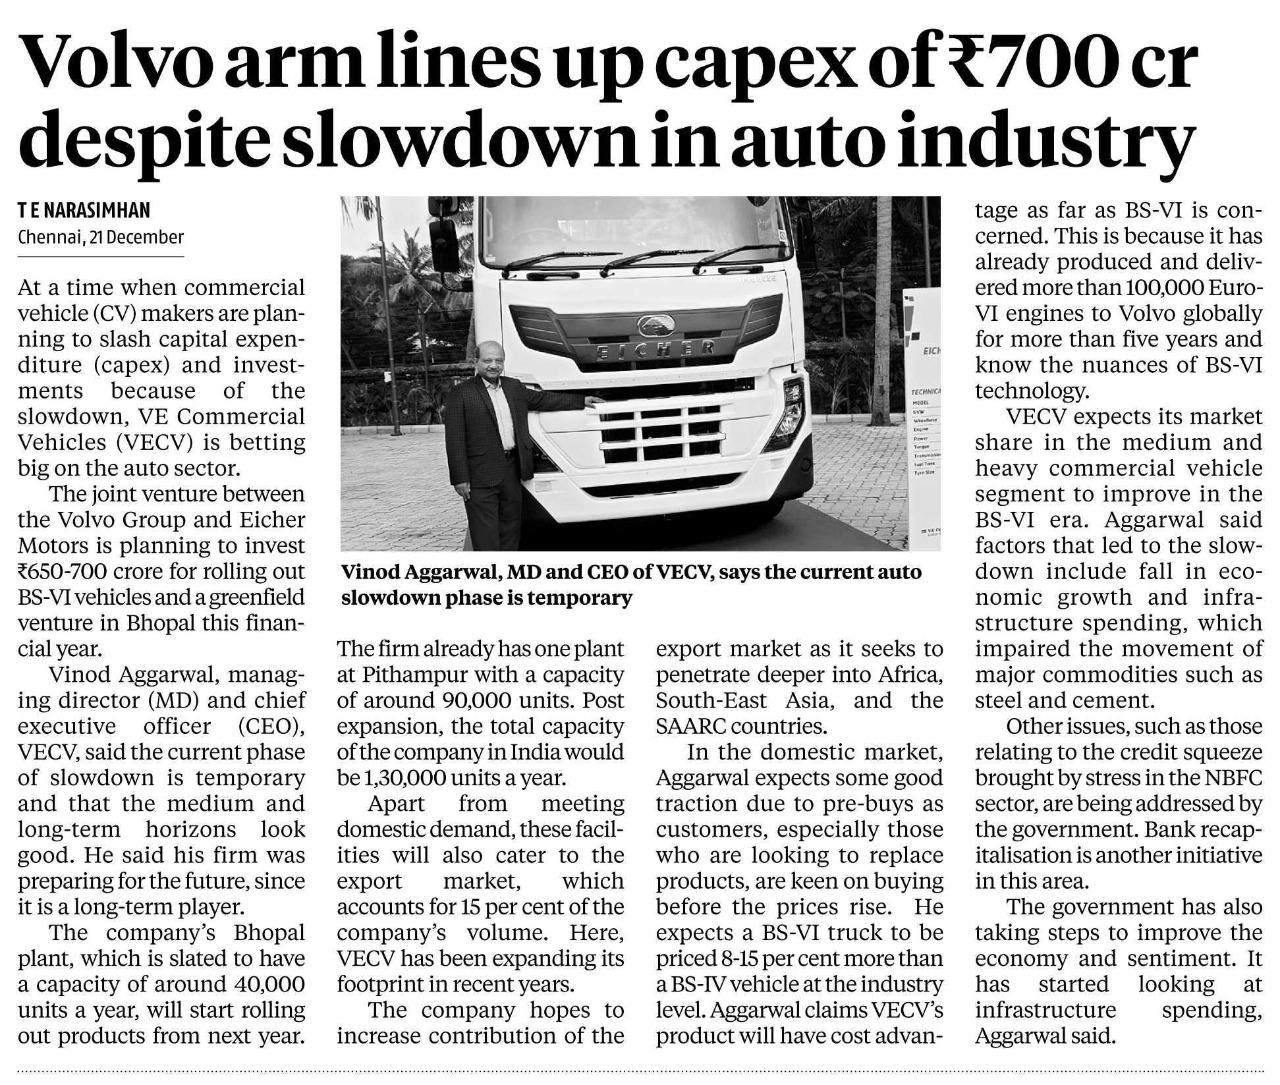 Business Standard - Despite auto slump, VECV